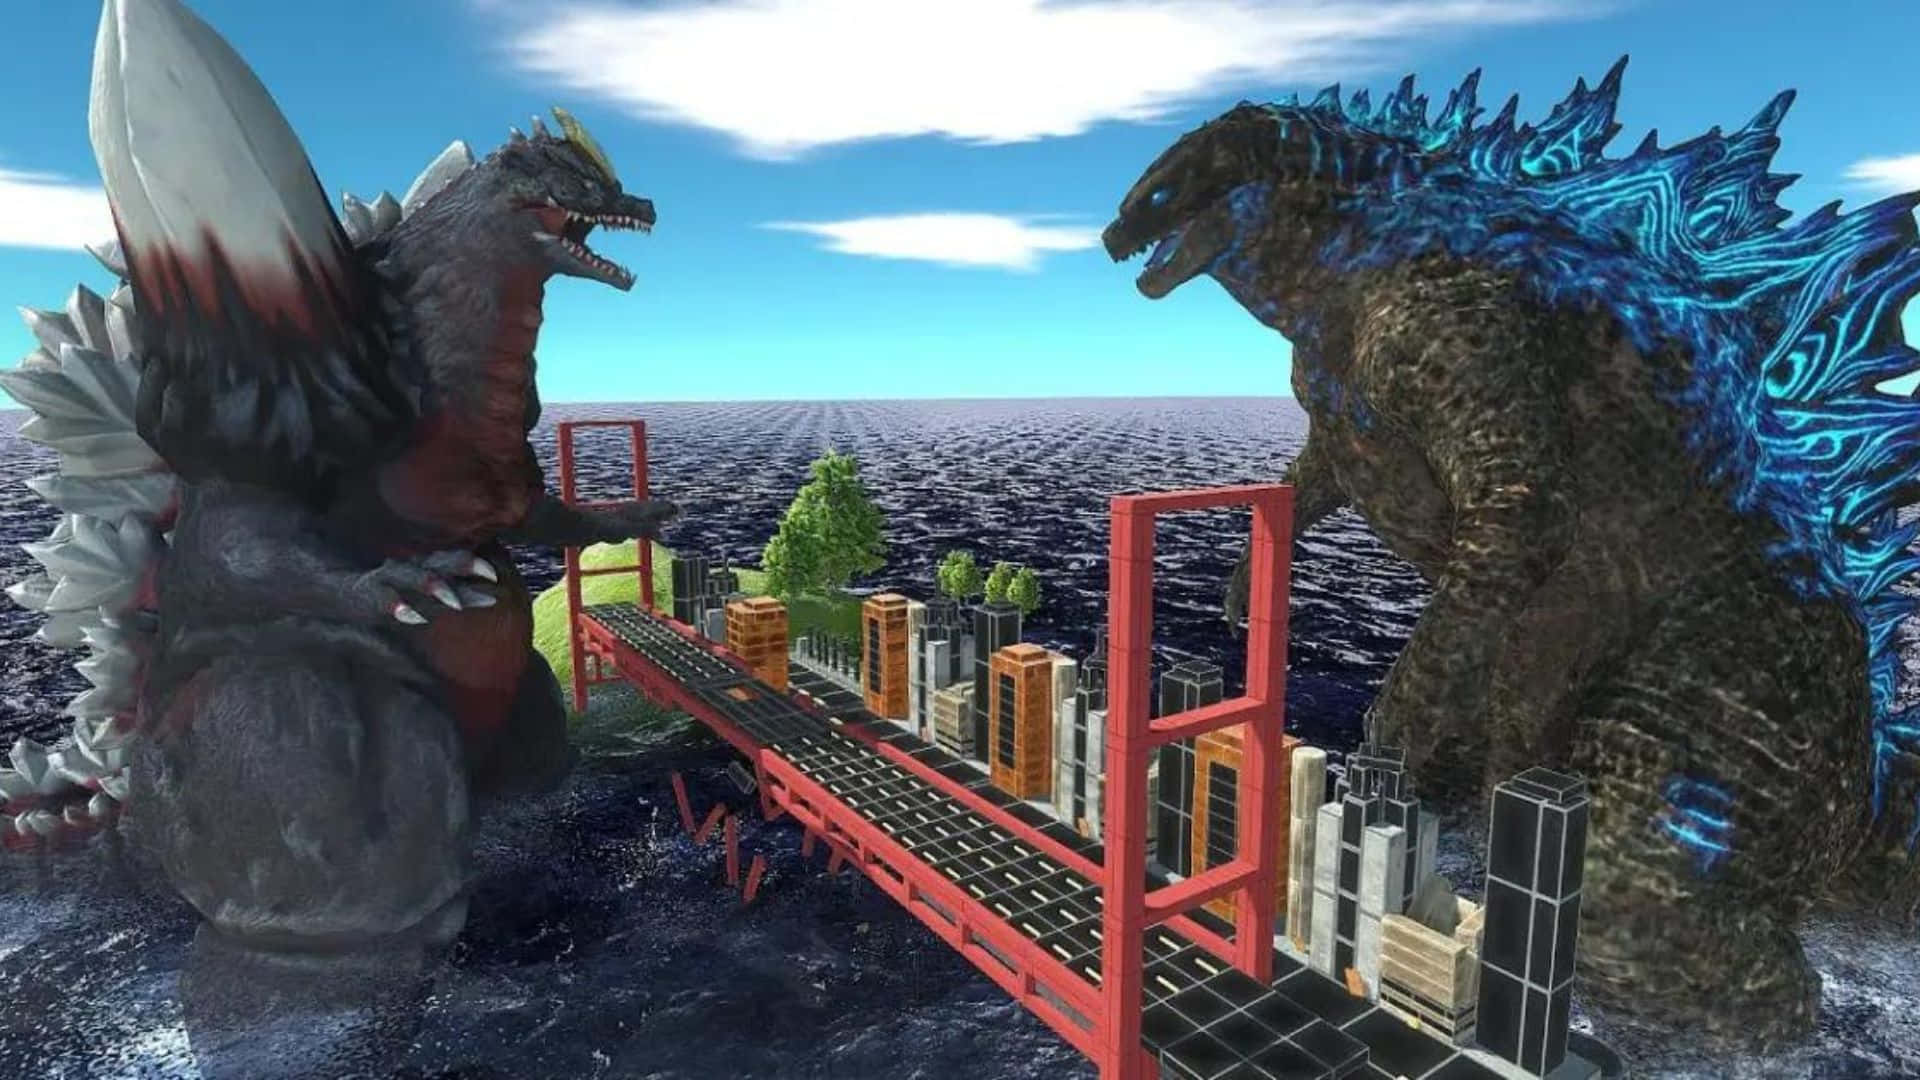 Godzilla and SpaceGodzilla locked in an epic battle Wallpaper